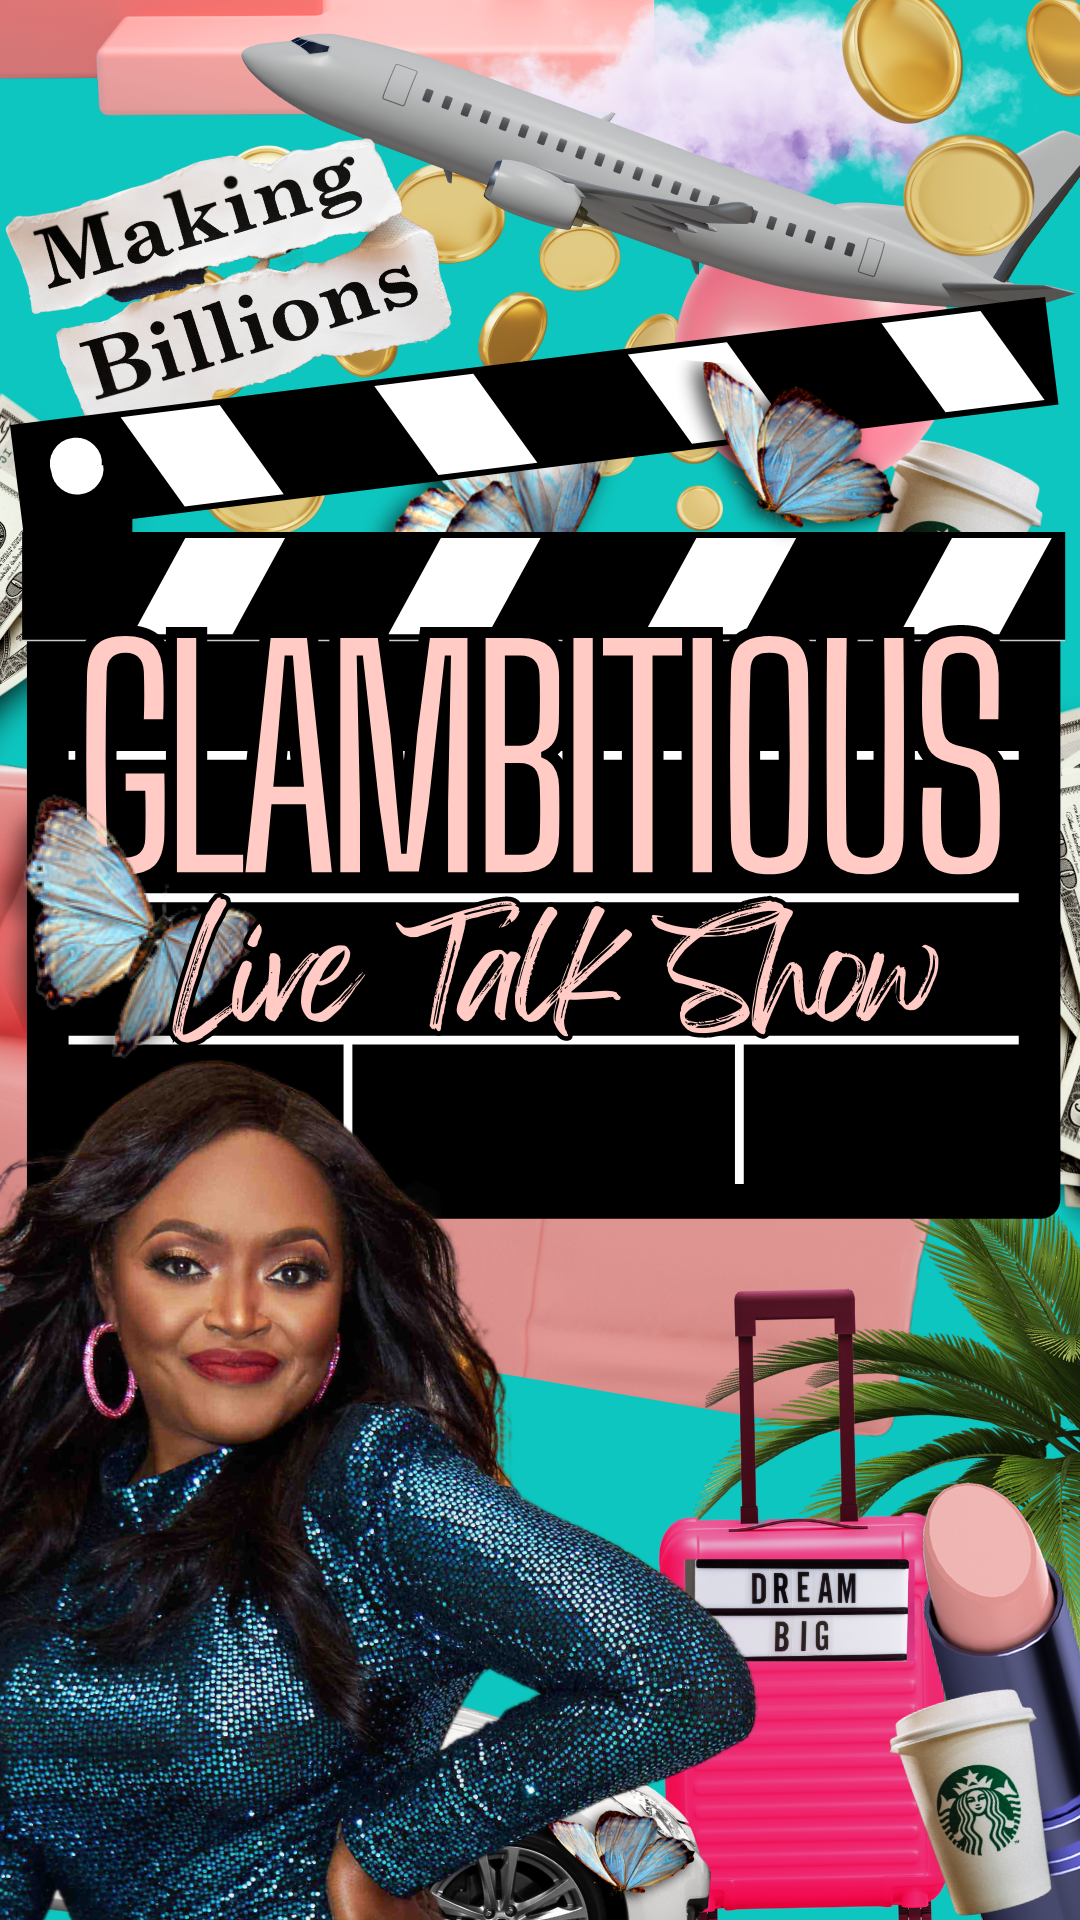 Glambitious Live Talk Show Interview